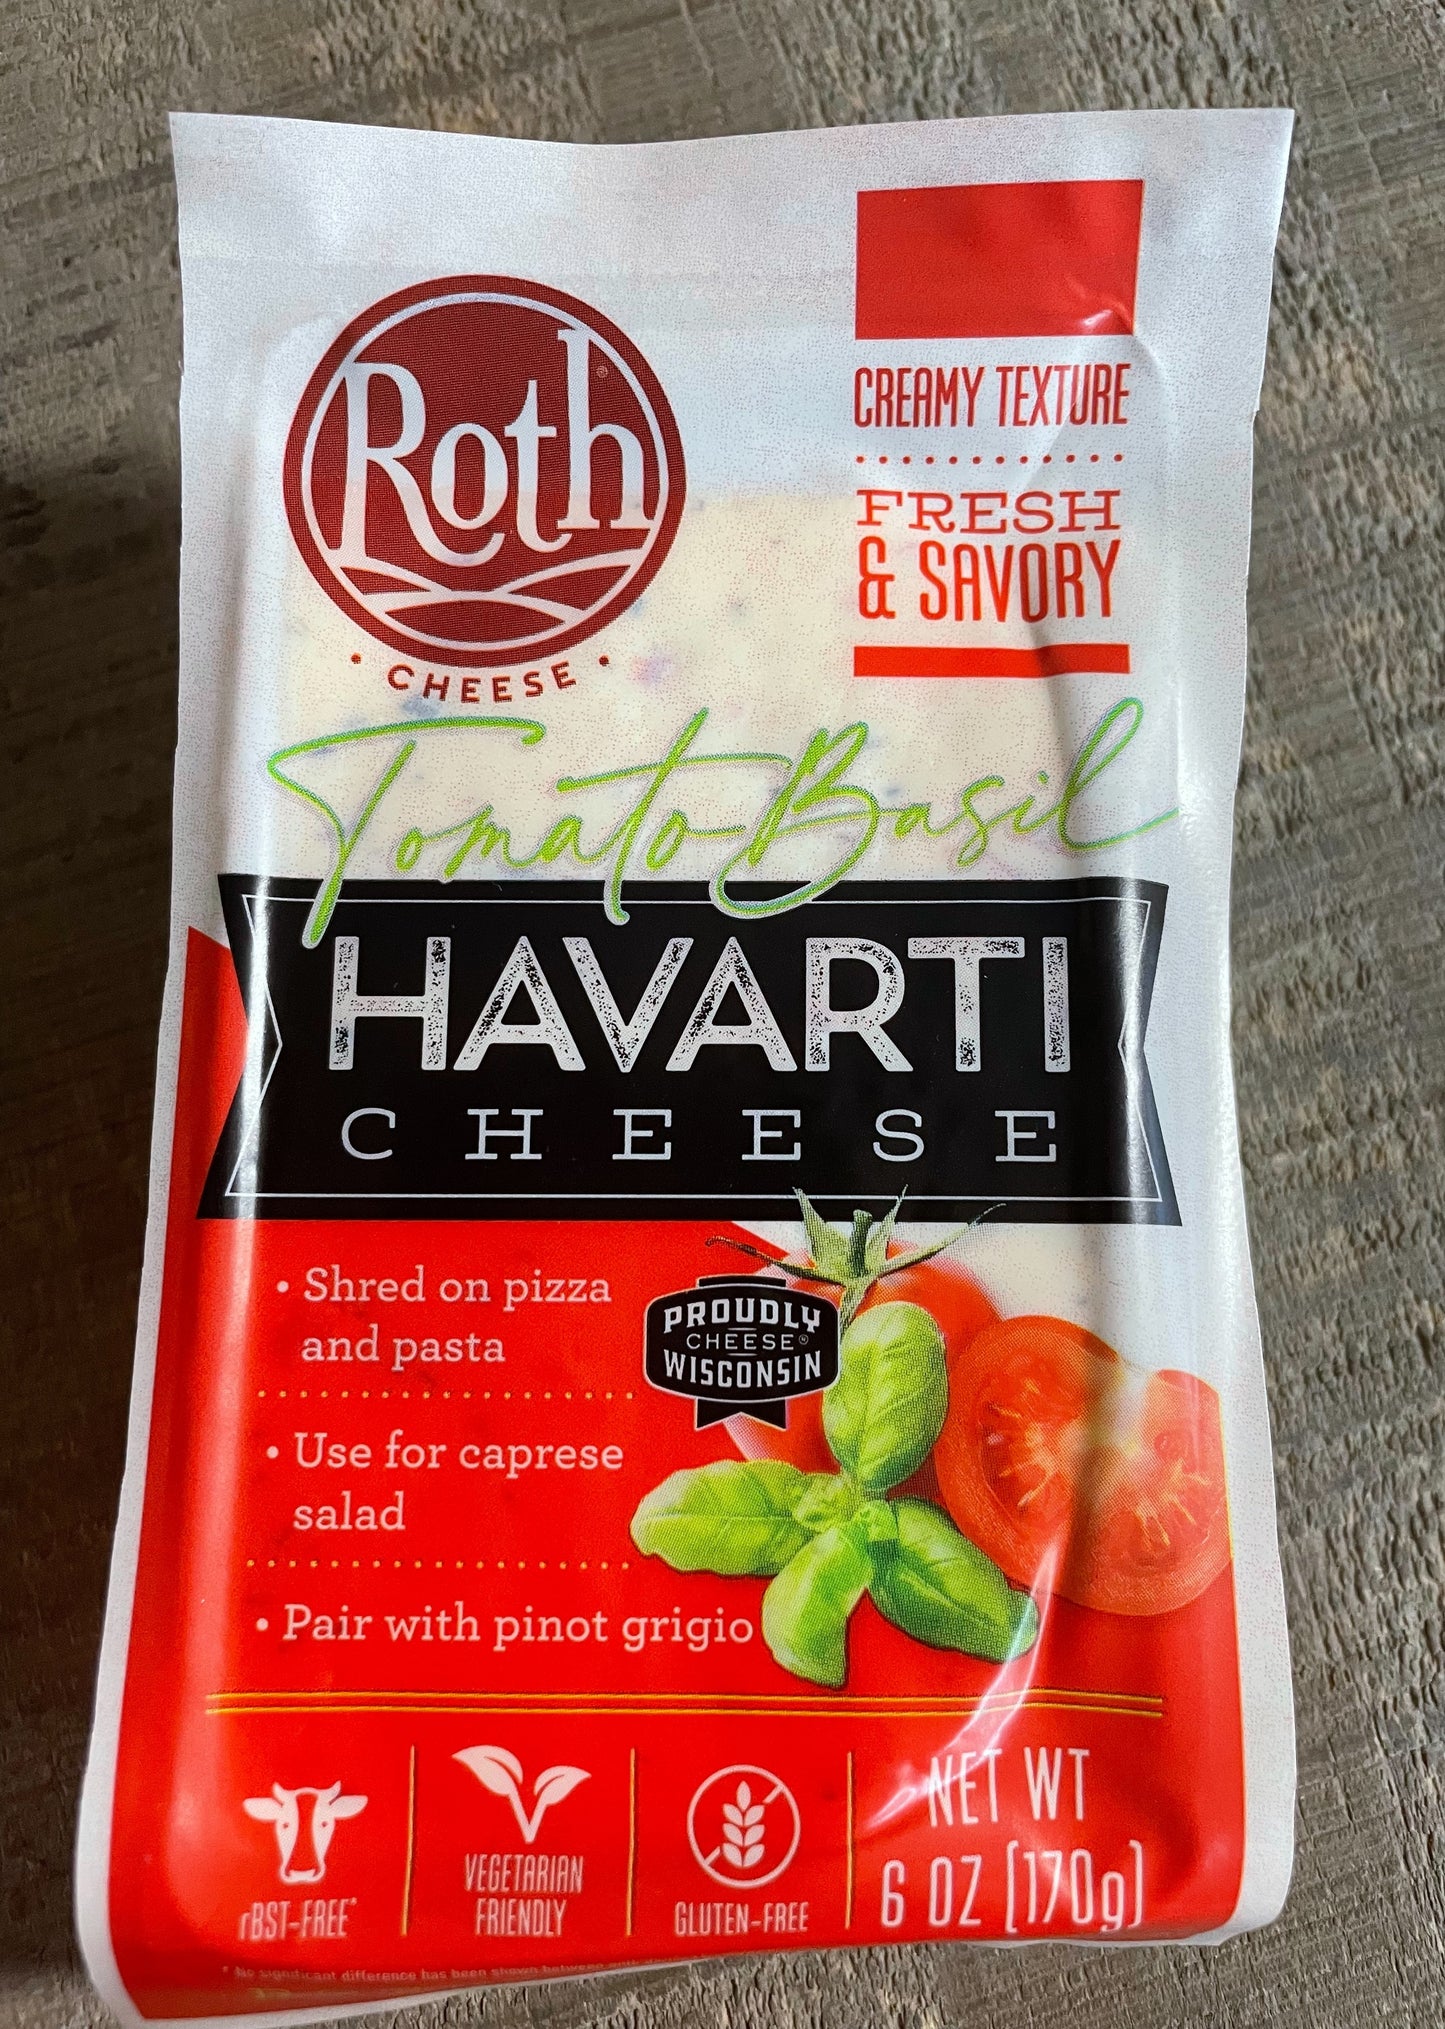 Roth Tomato Basil Havarti